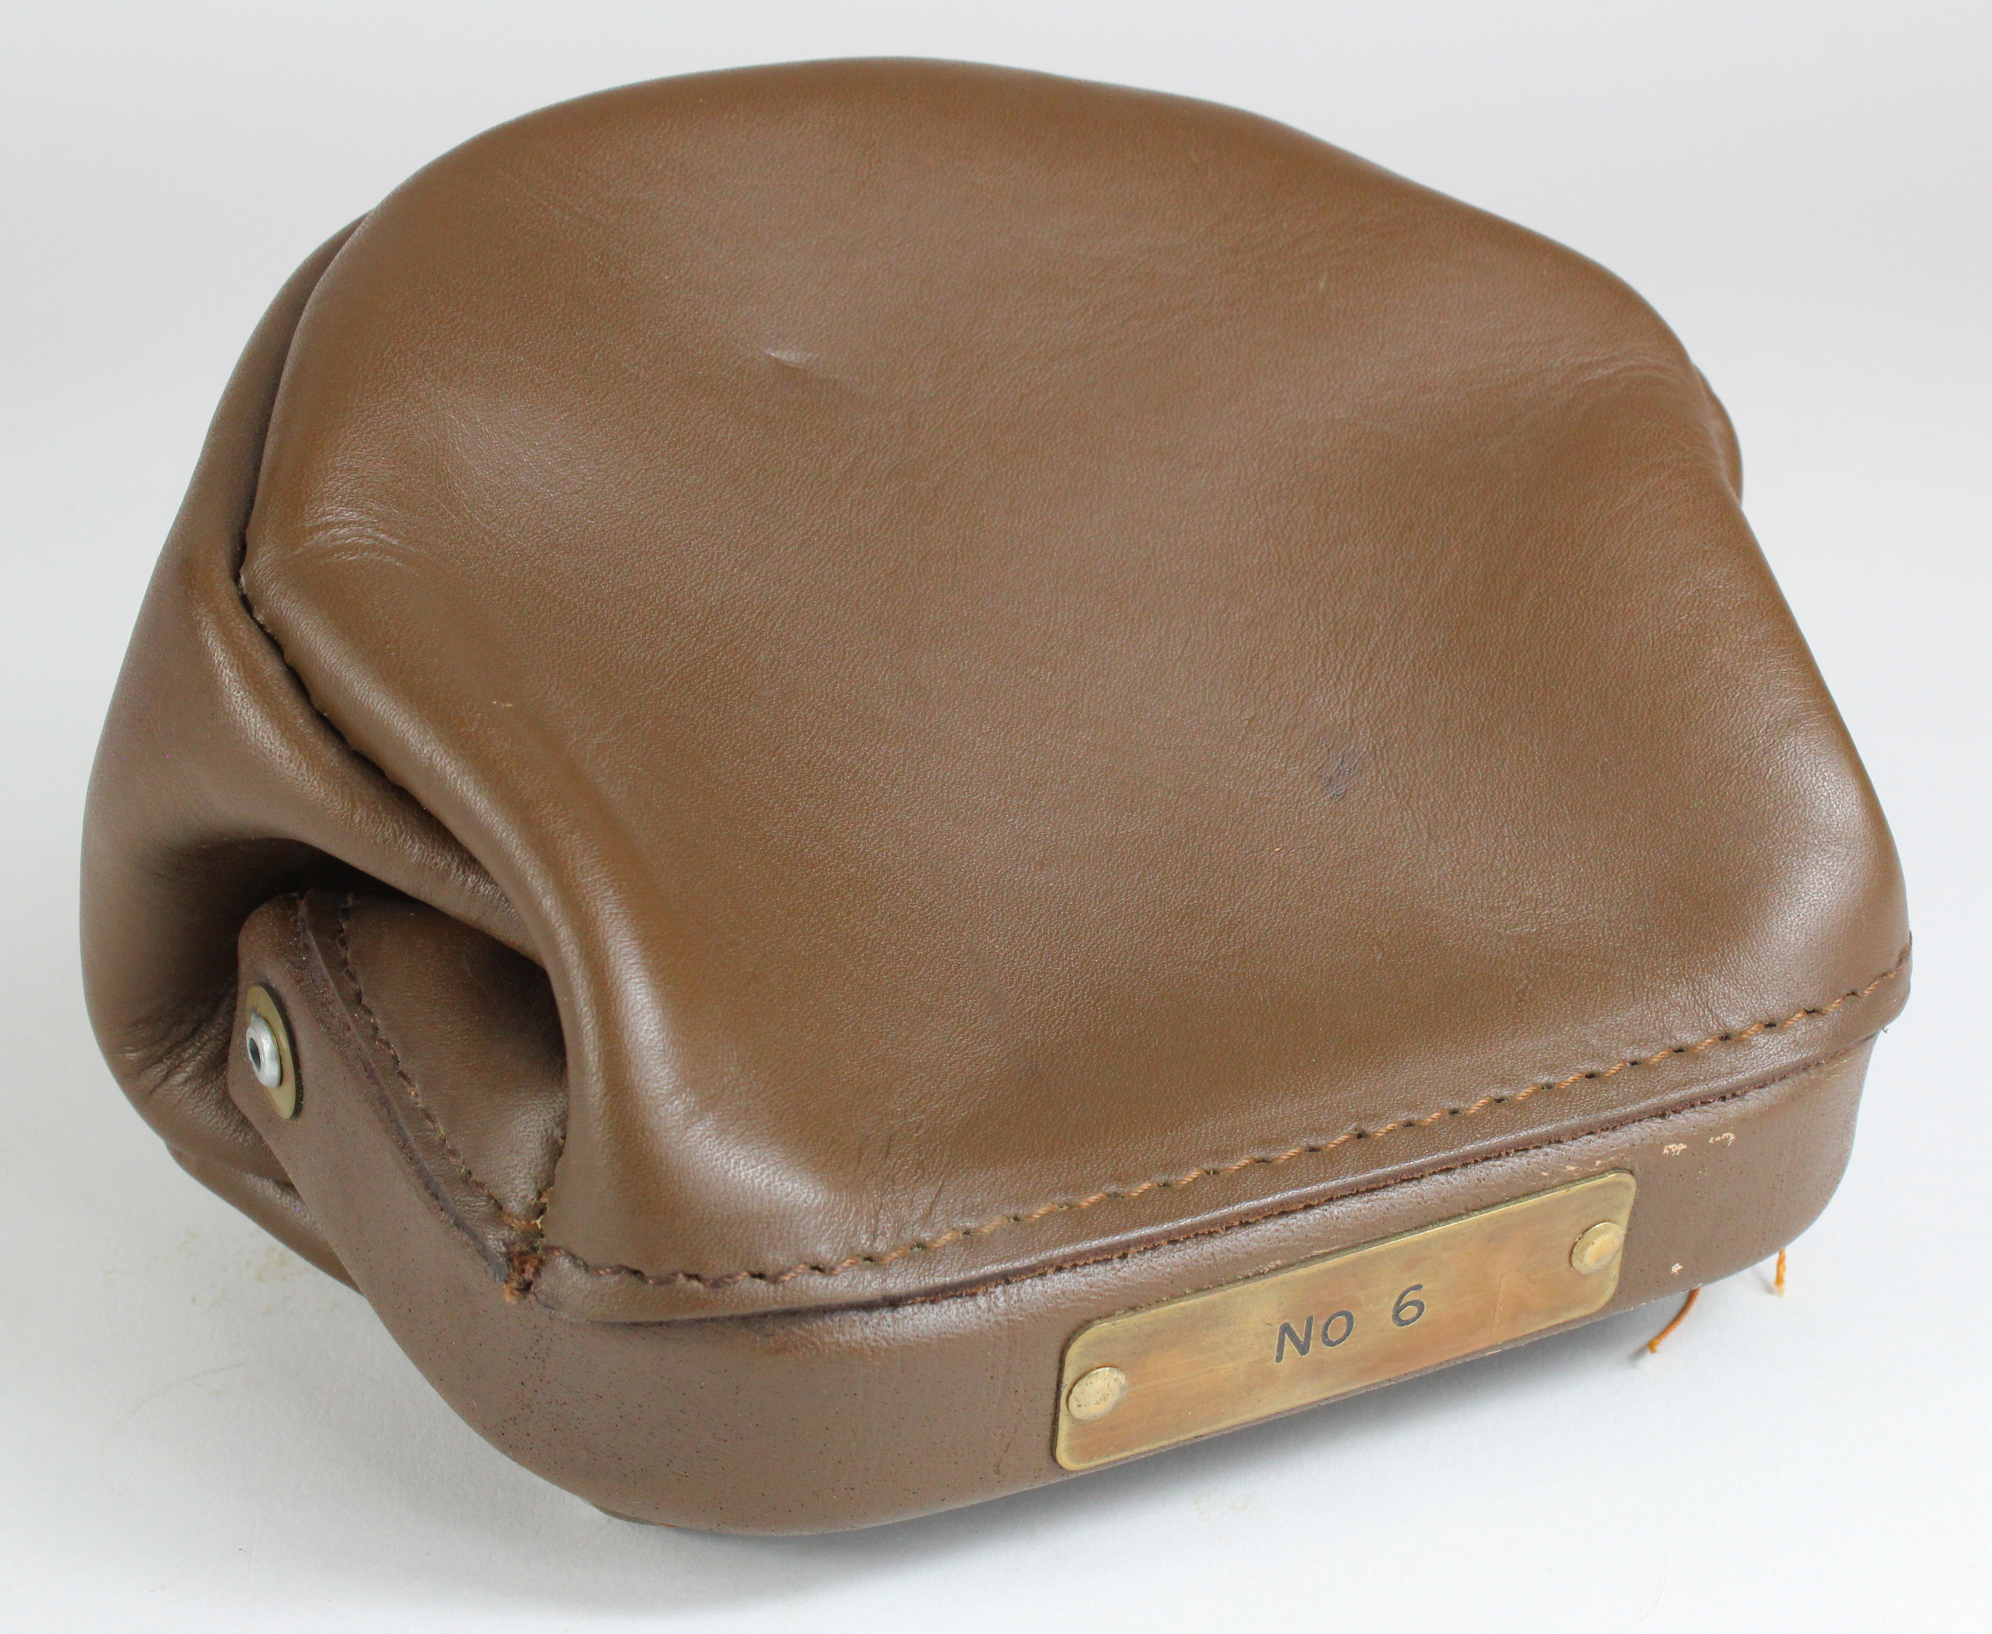 Night safe bag, Unbranded Leather night safe bag number 6 complete with 2 keys, good condition